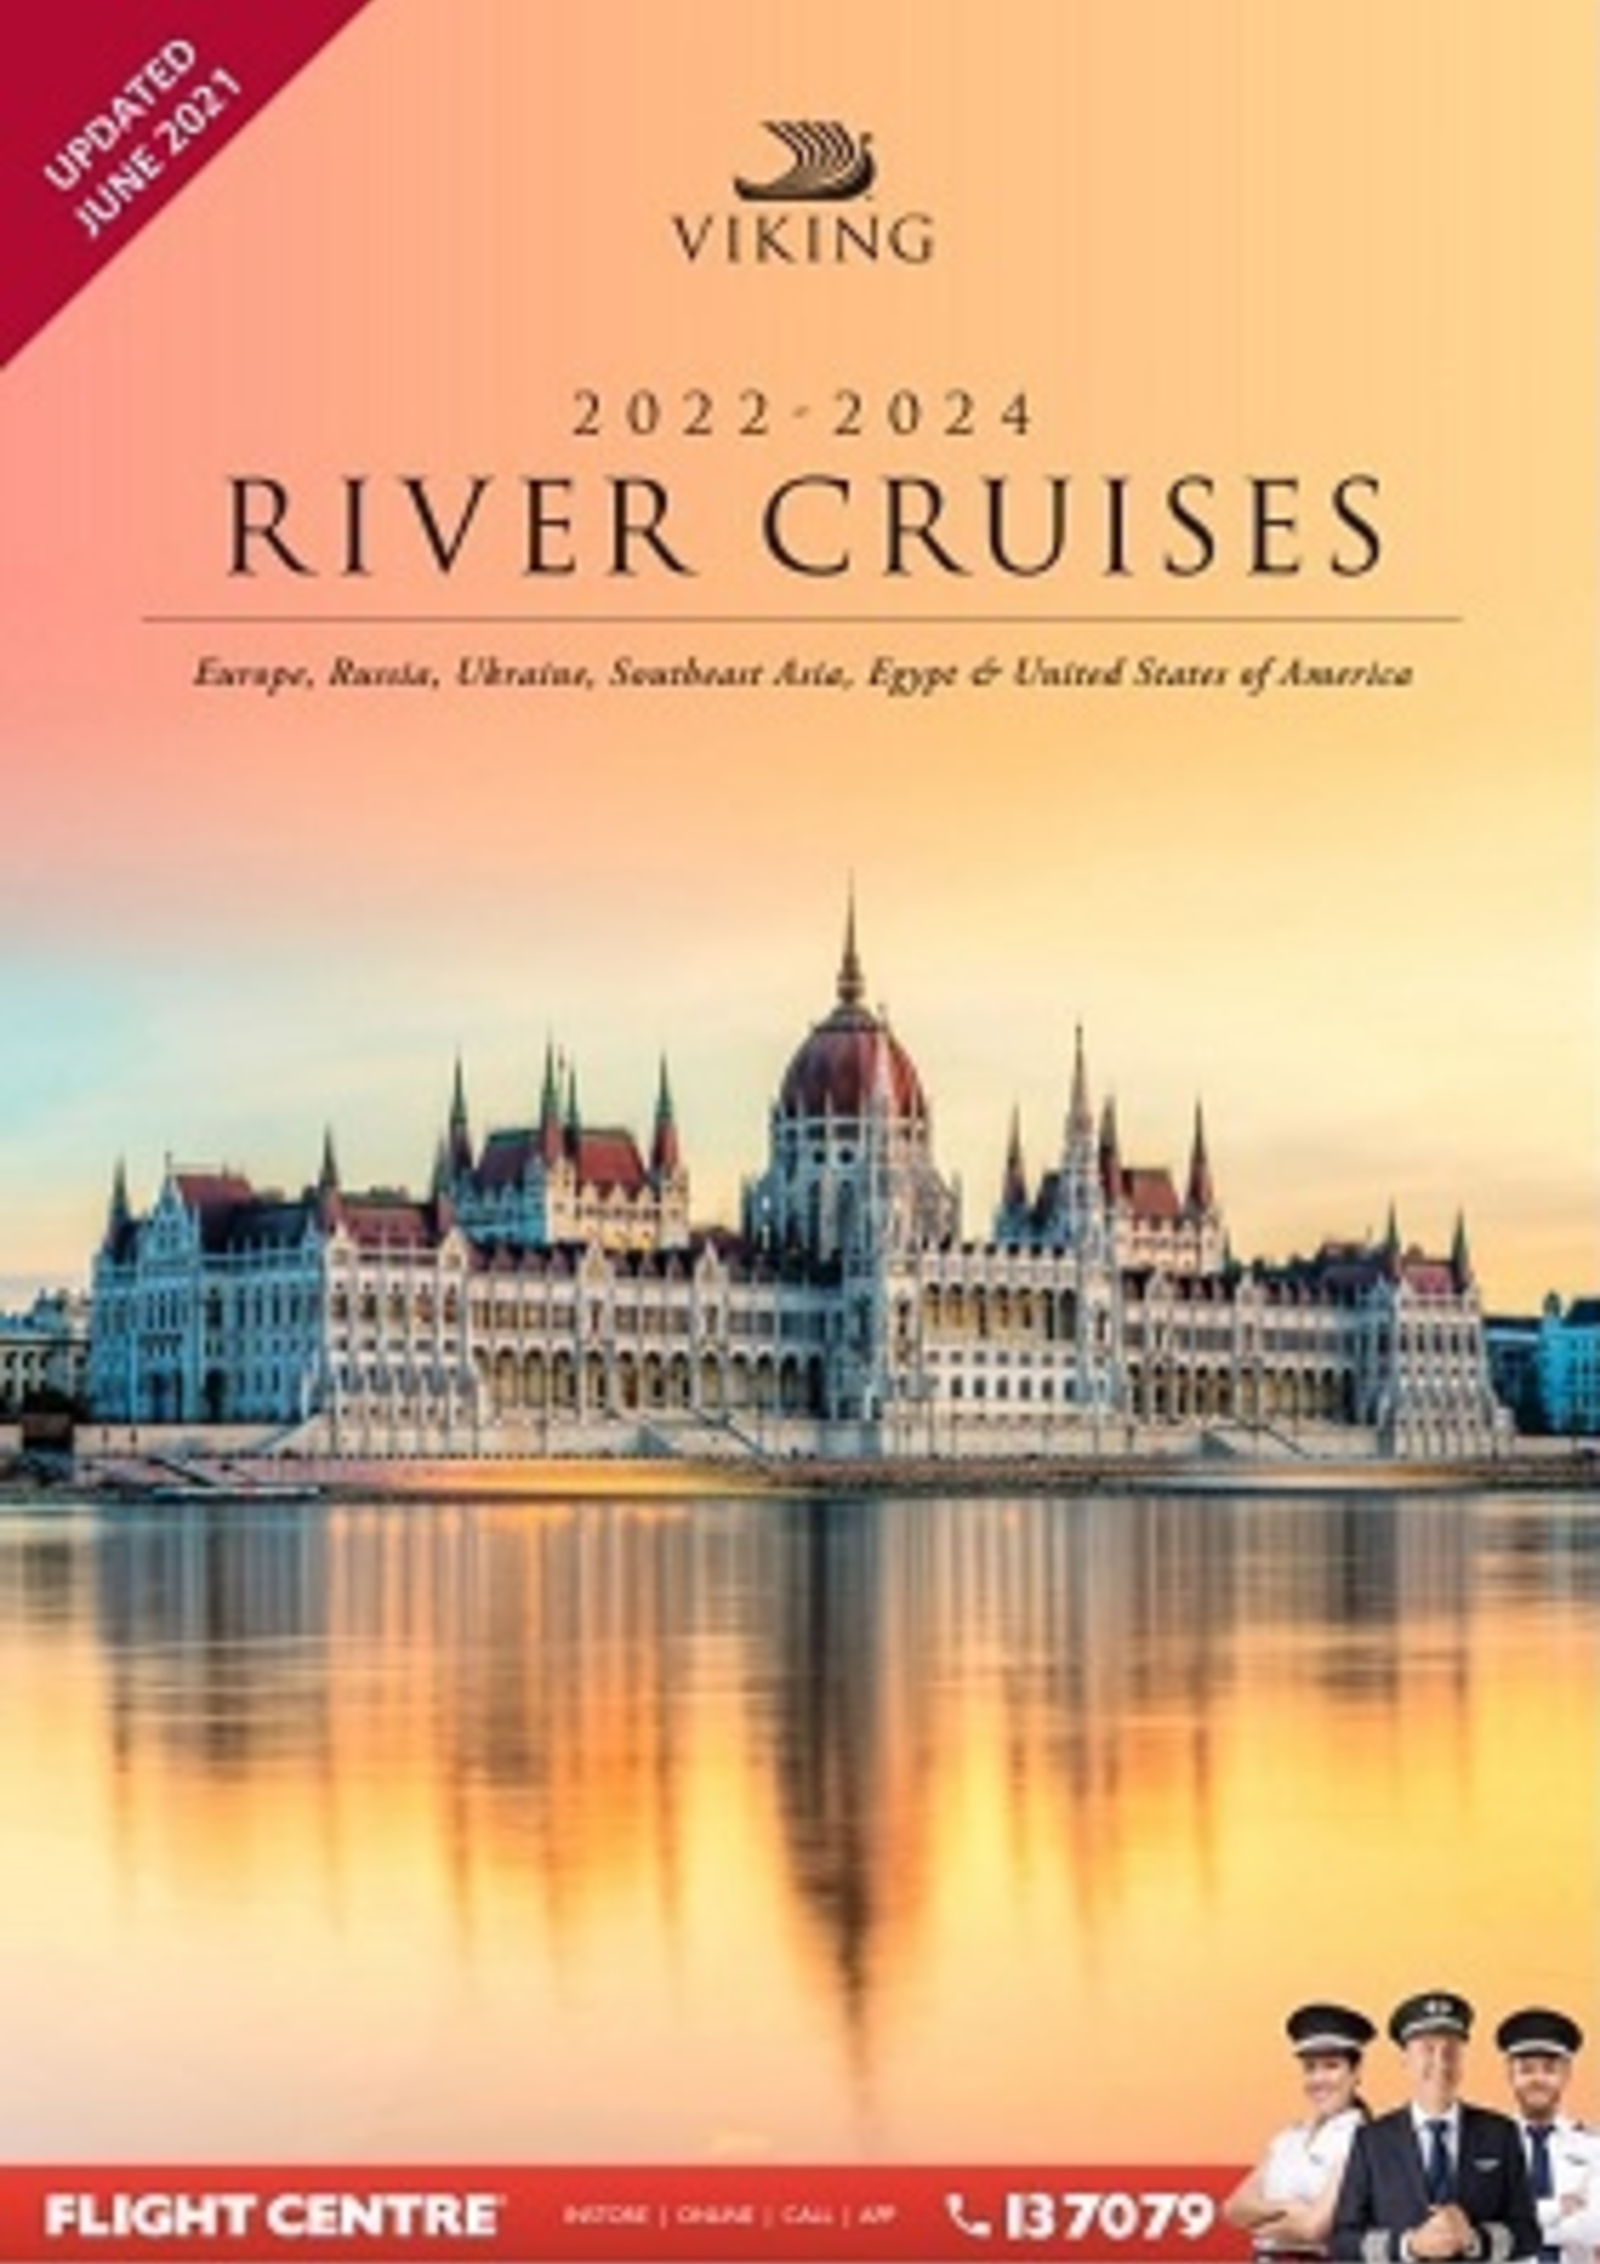 Viking River Cruises Tile.JPG